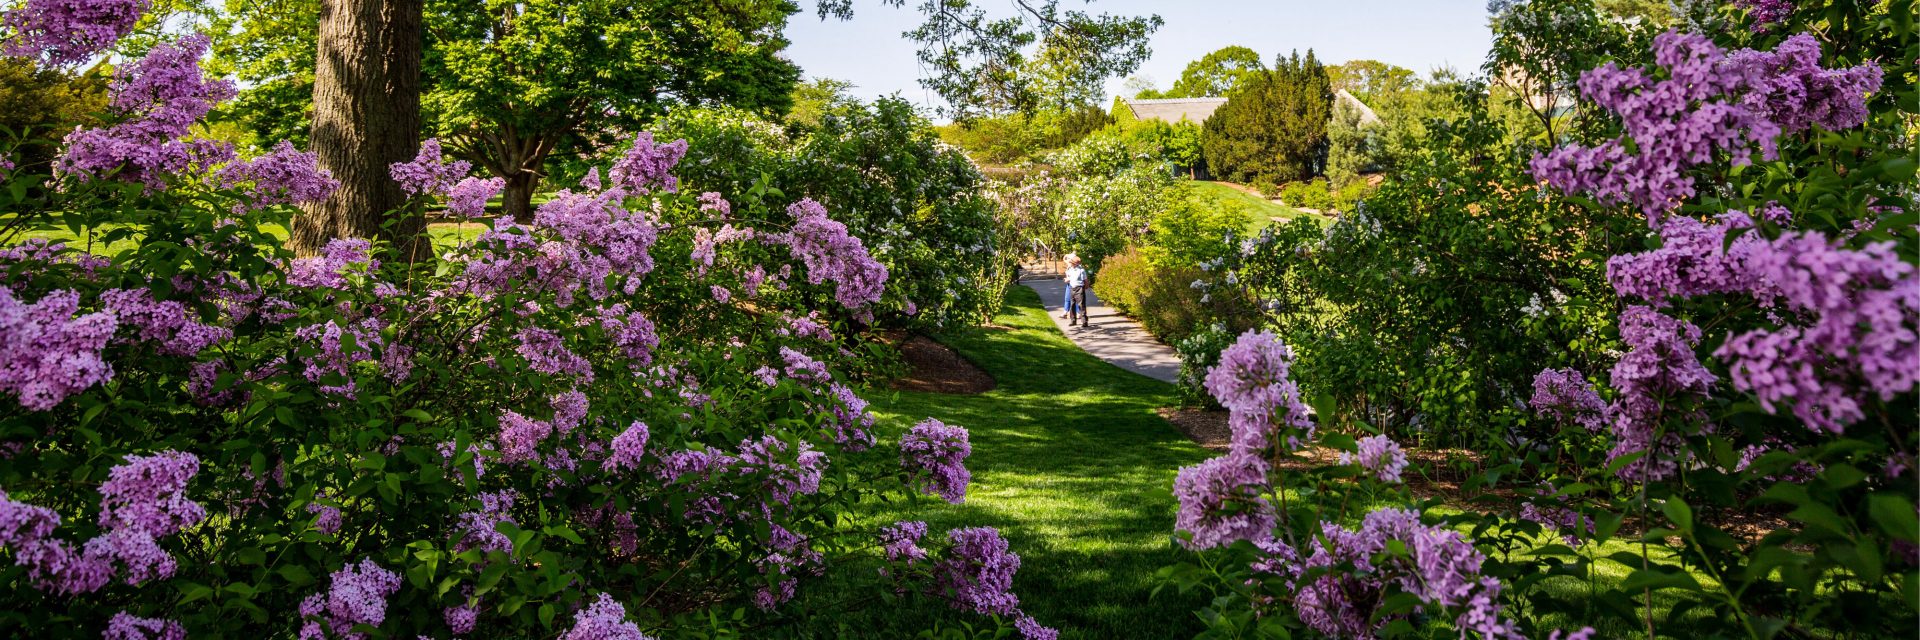 Visitors walking near bushes of purple lilacs